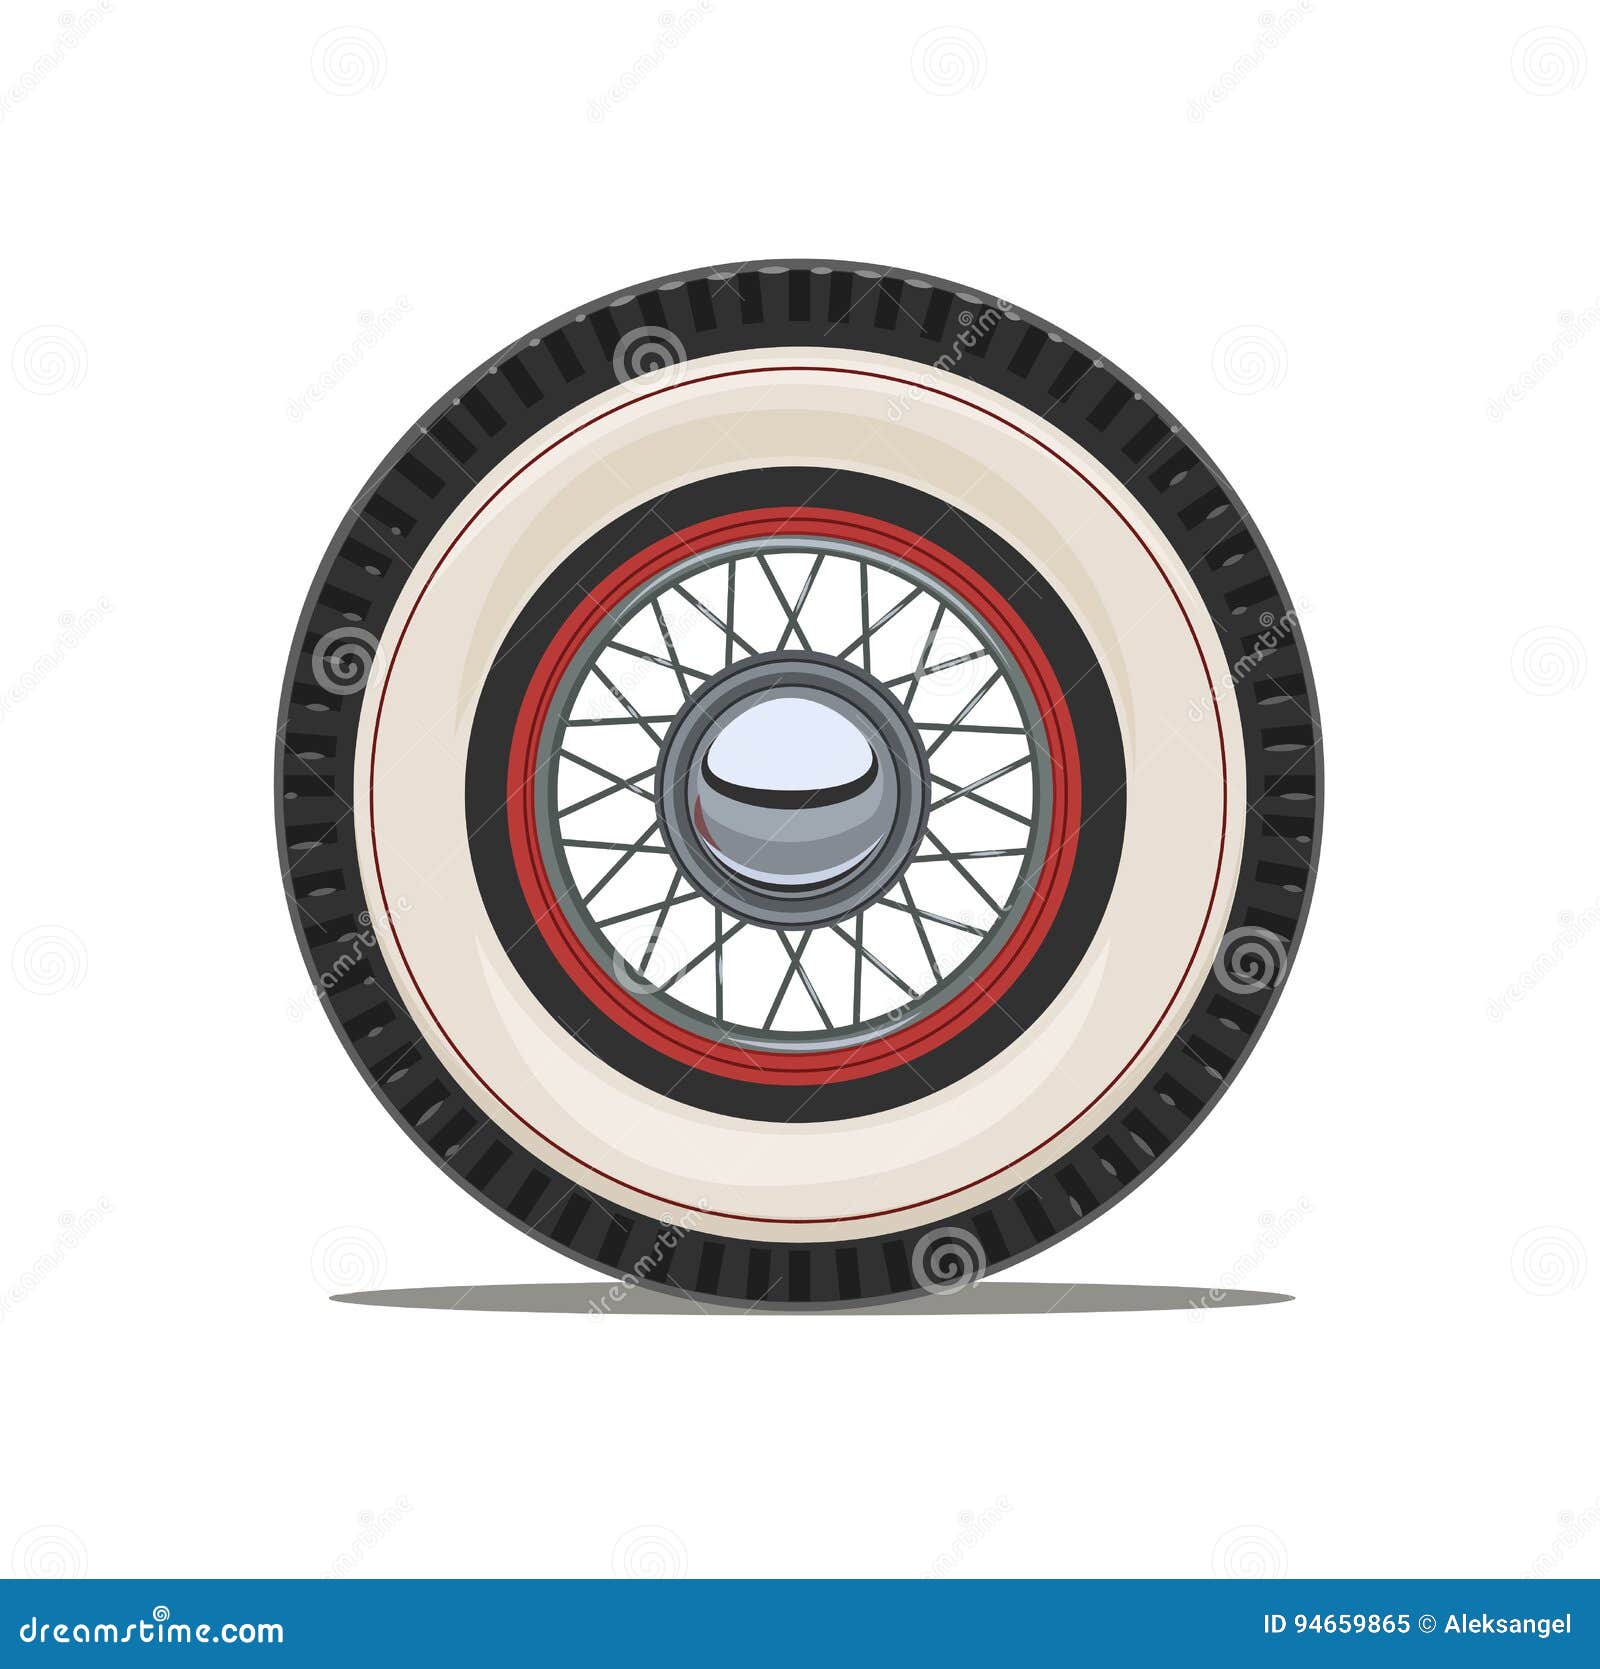 vintage car wheel with spoke  .